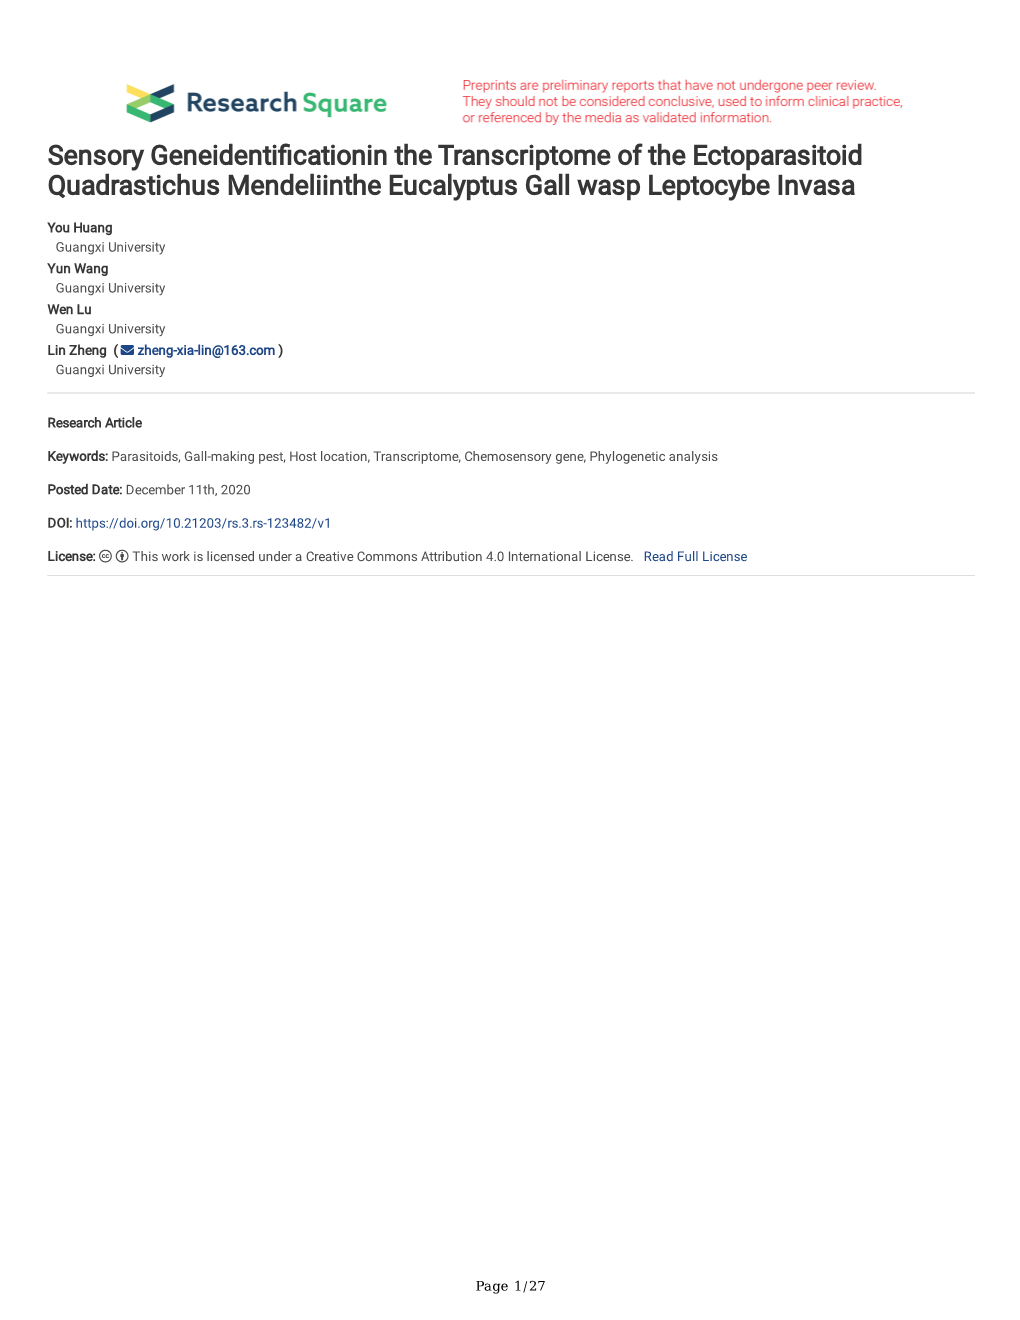 Sensory Geneidenti Cationin the Transcriptome of the Ectoparasitoid Quadrastichus Mendeliinthe Eucalyptus Gall Wasp Leptocybe In